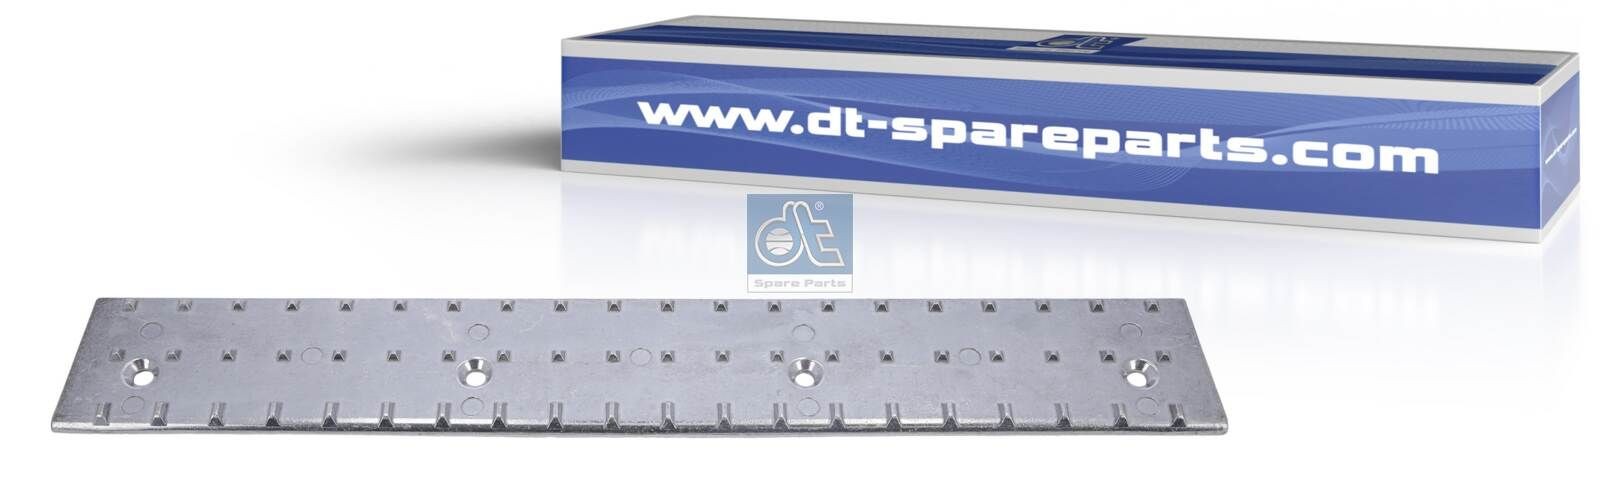 5.16094 DT Spare Parts Trittbrett DAF CF 85